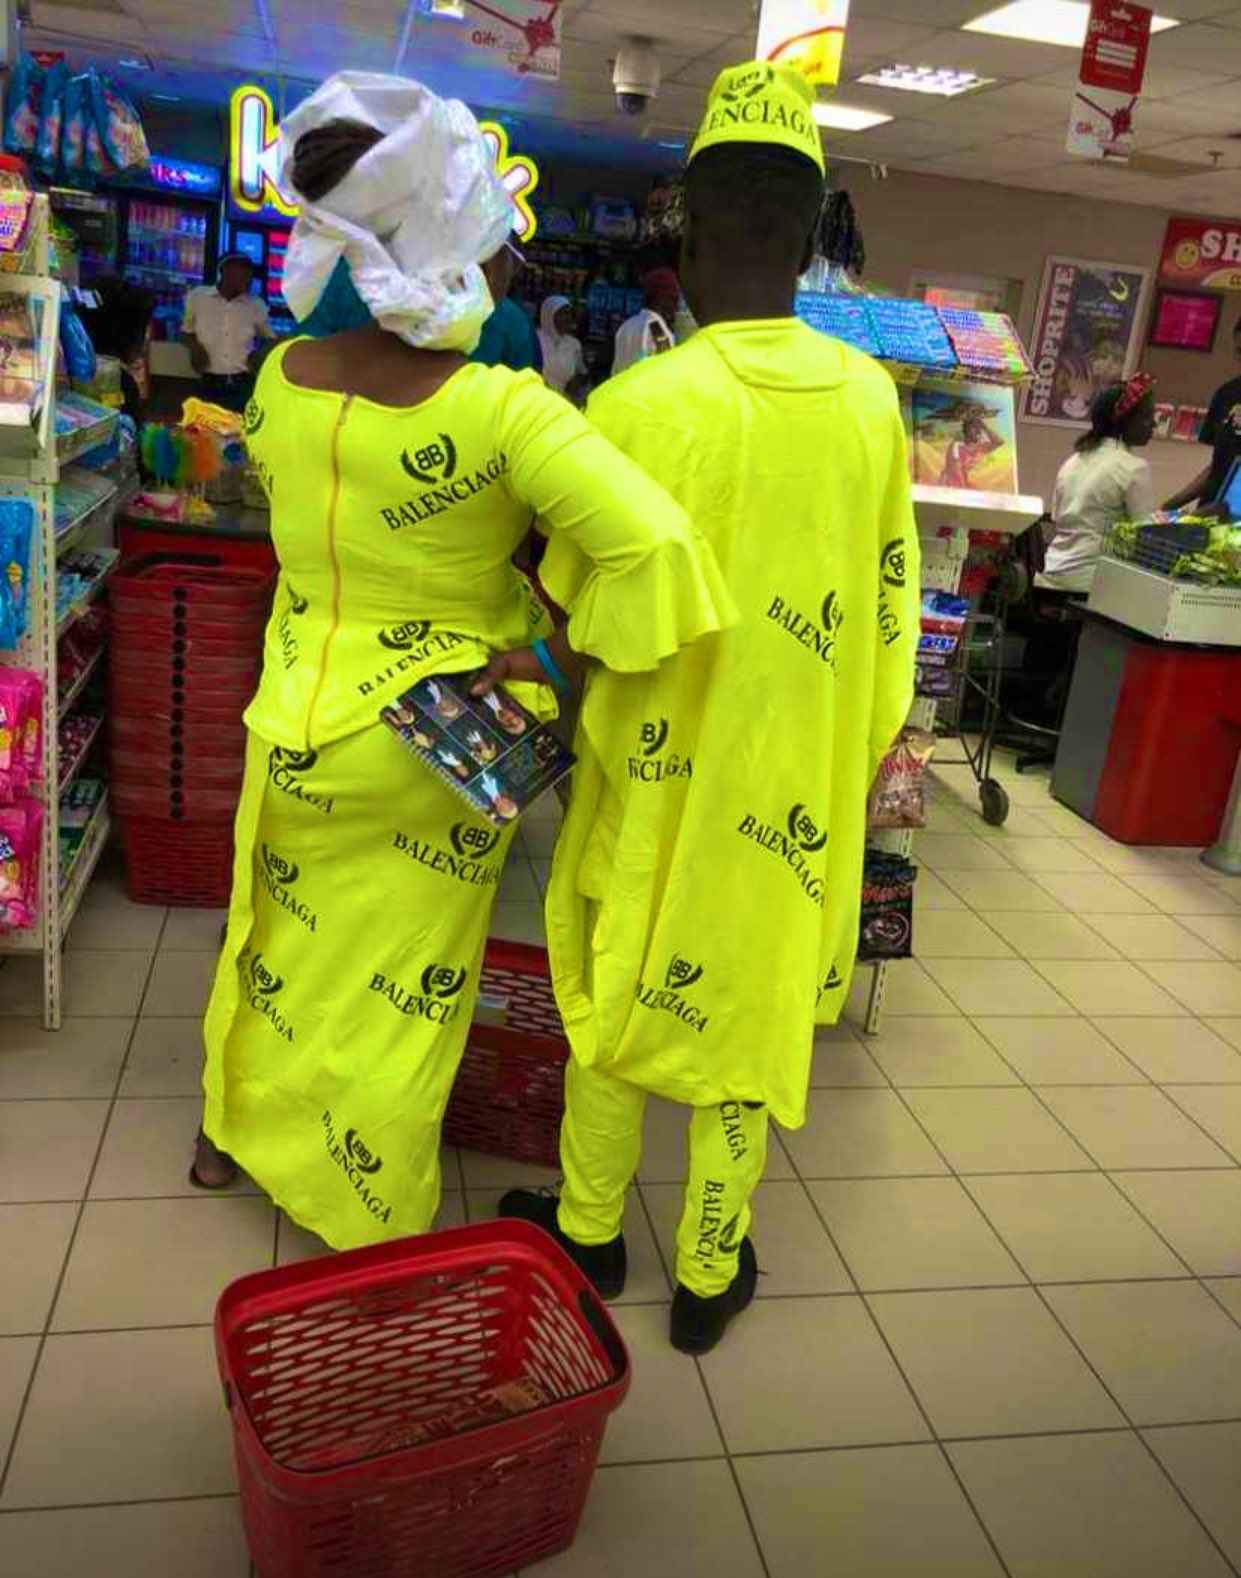 The Nigerian couple in their custom made Balenciaga outfits